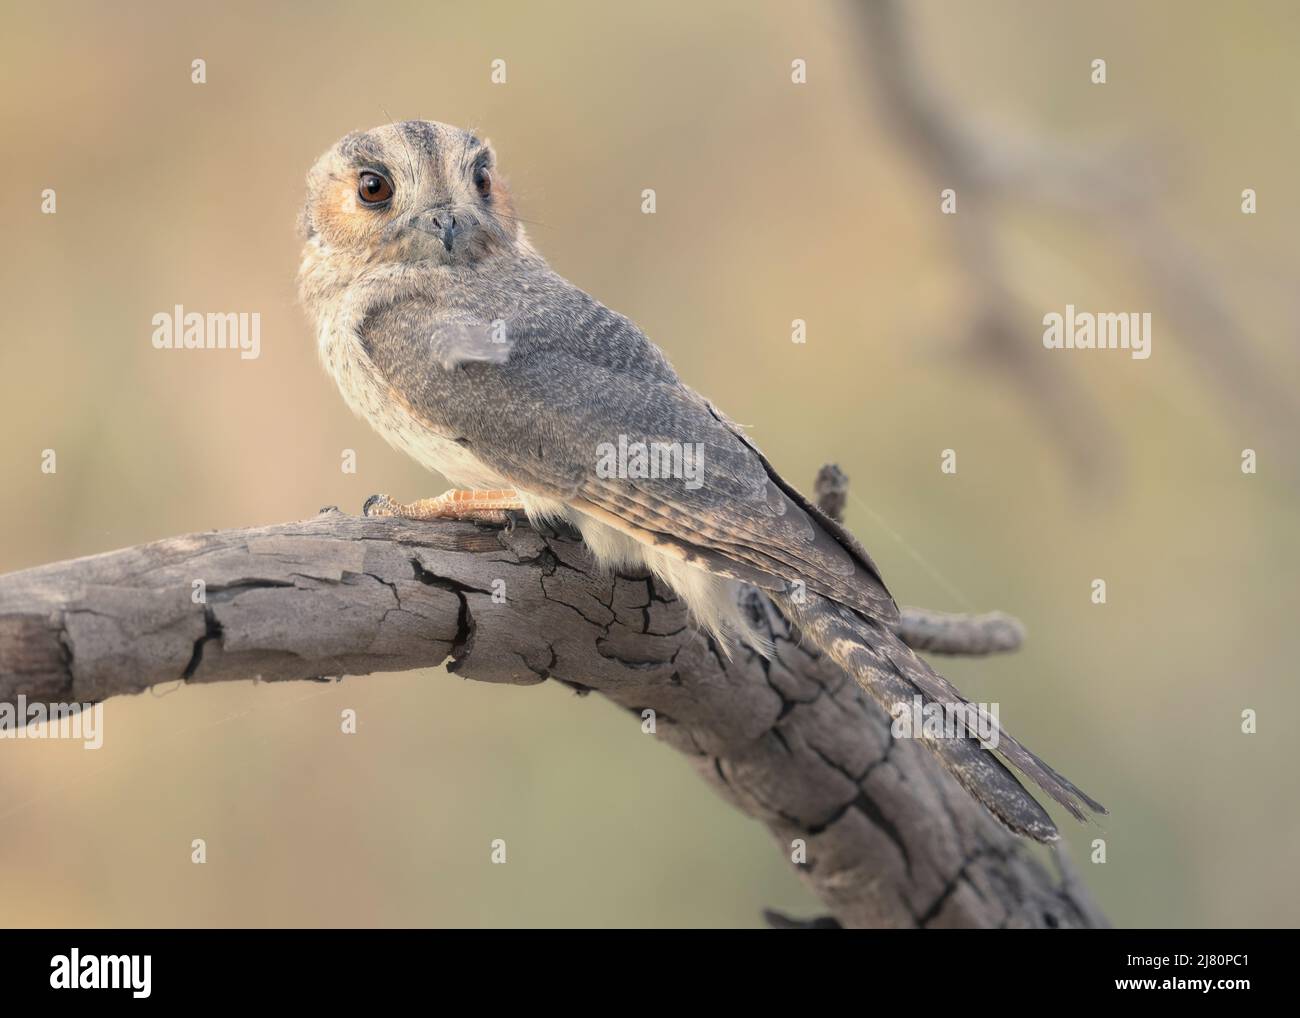 Wild owlet-nightjar (Aegotheles cristatus) perched on branch, Australia Stock Photo